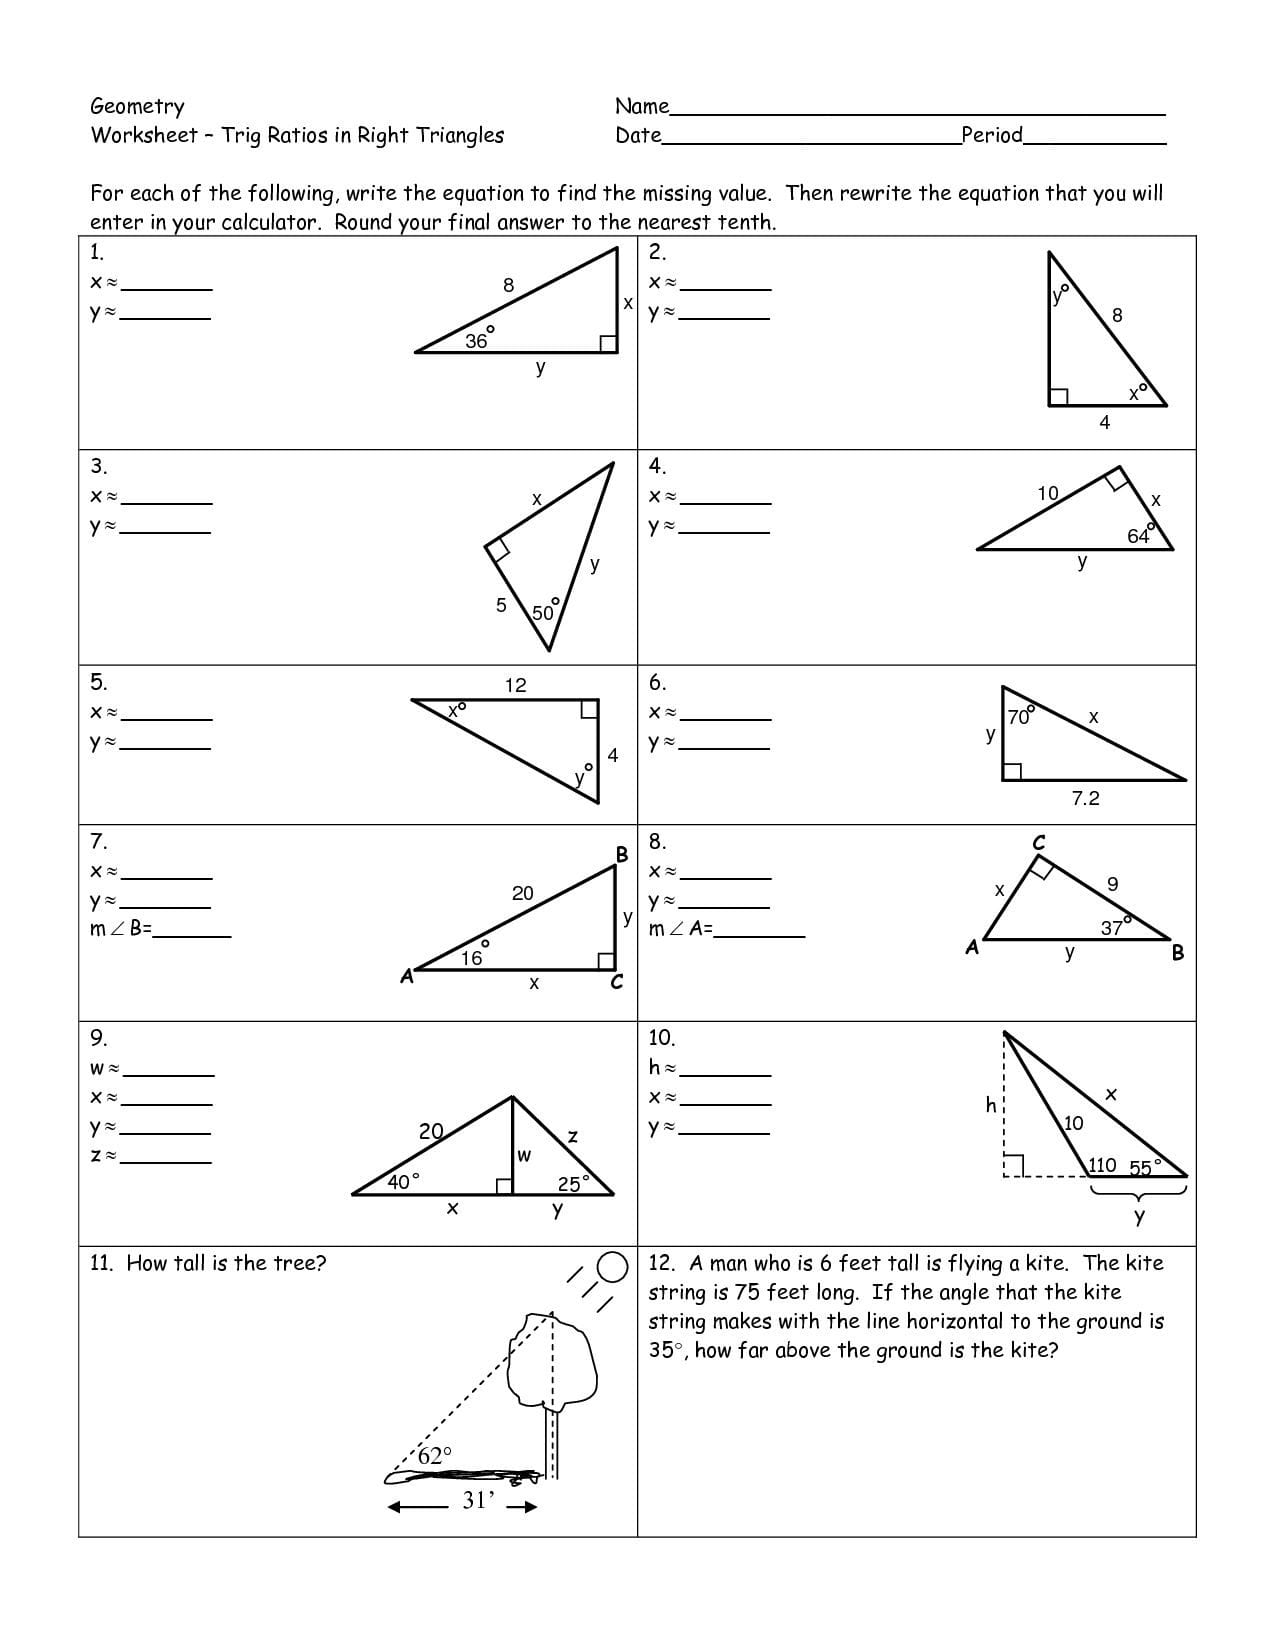 Trigonometry Worksheets Pdf  Briefencounters With Trigonometry Worksheets Pdf